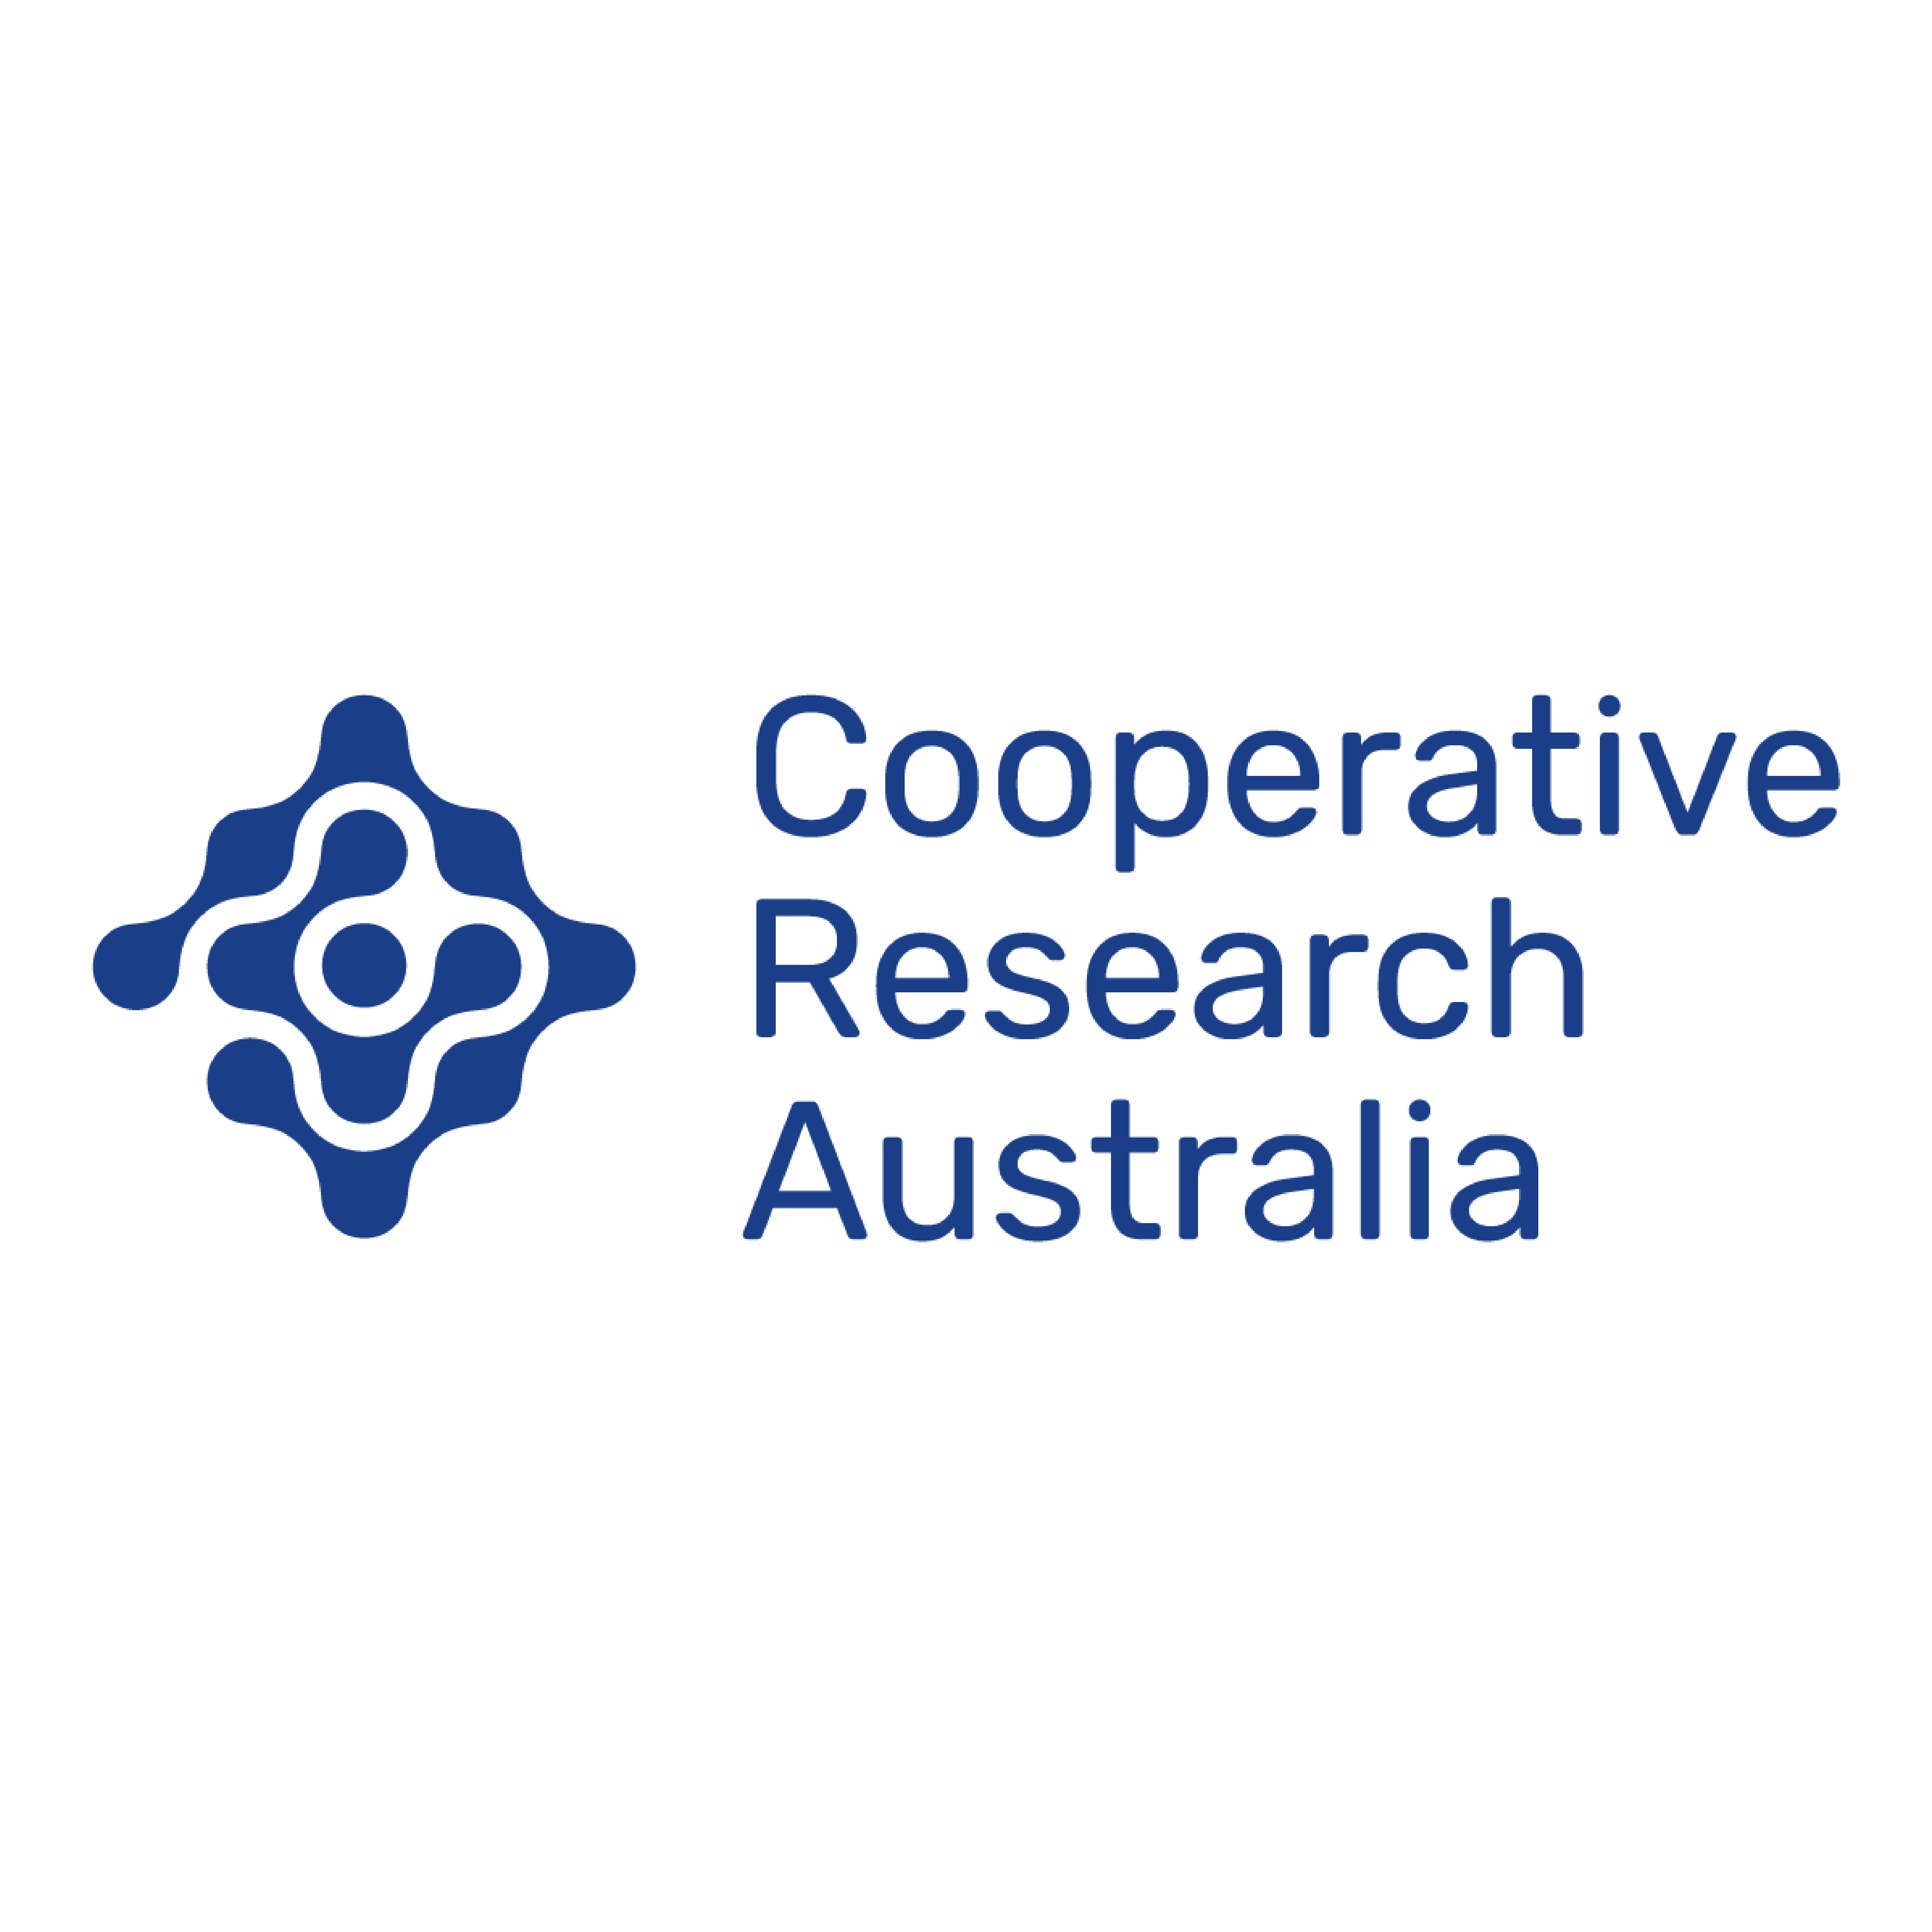 Cooperative Research Australia